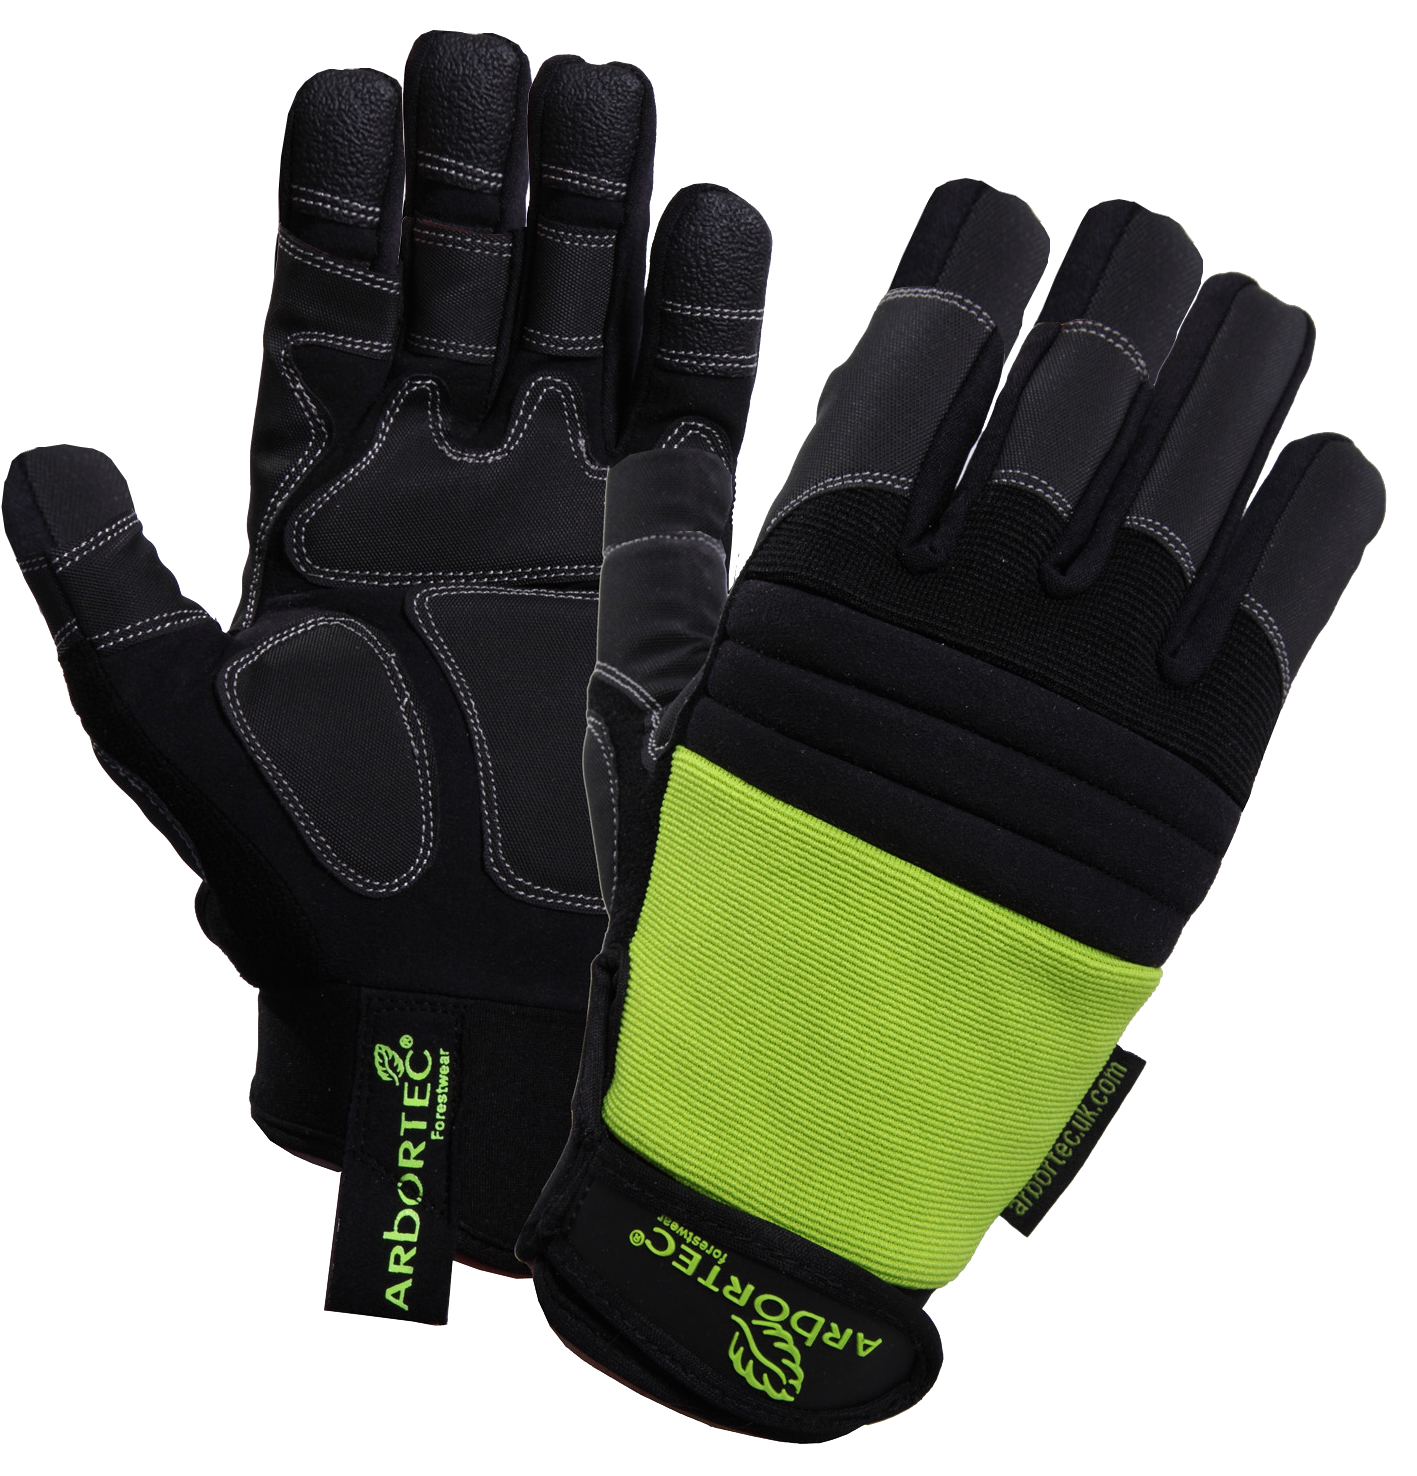 gloves clipart green glove